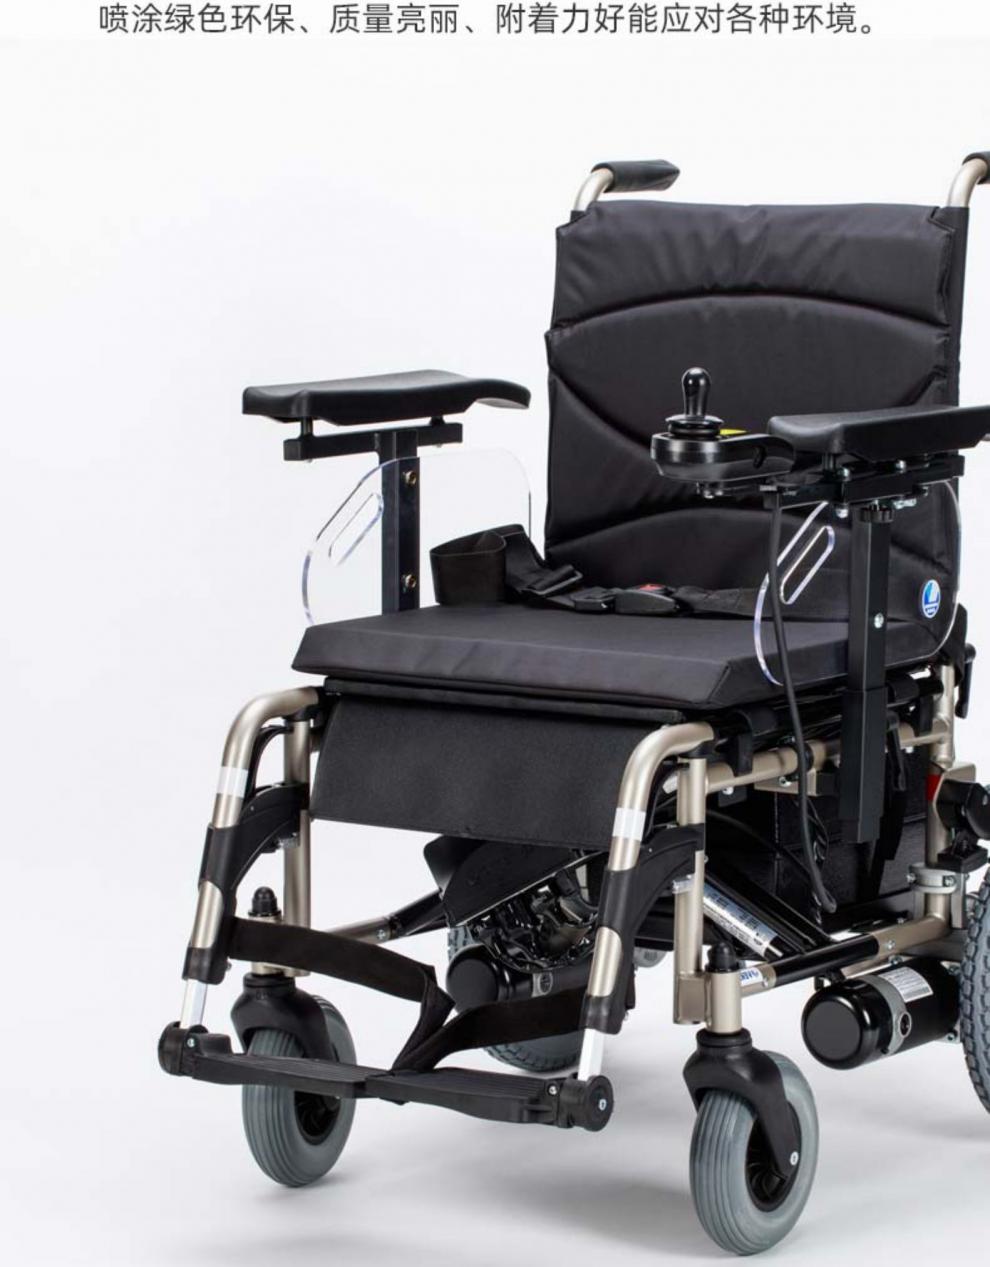 express 电动轮椅老人康复型轮椅 express 电动轮椅【图片 价格 品牌